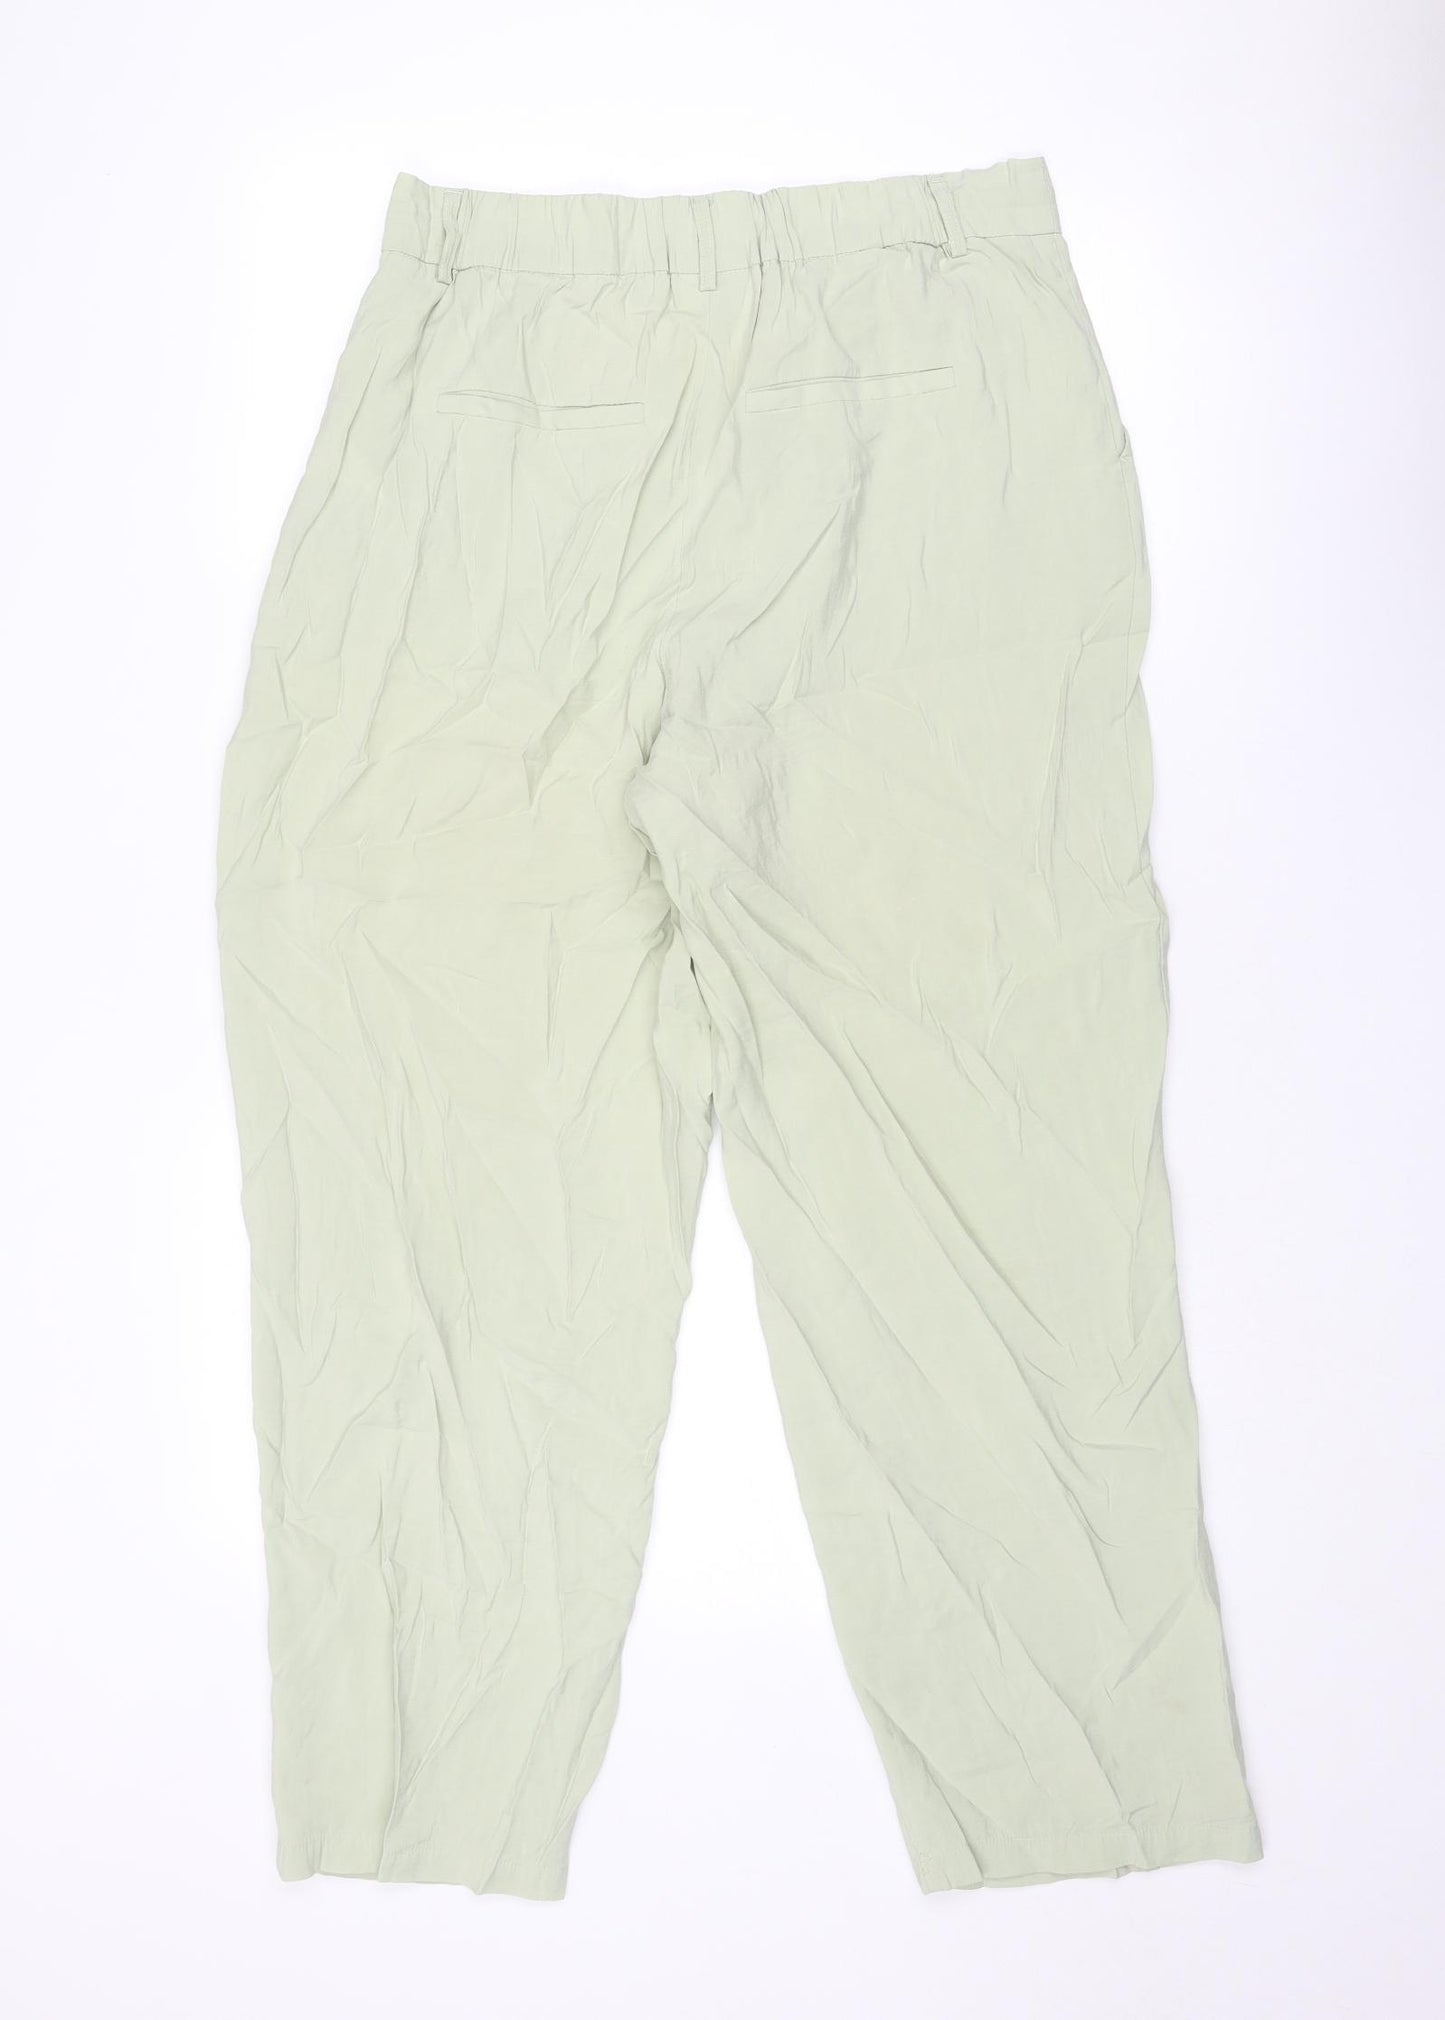 VILA Womens Green Viscose Carrot Trousers Size 16 Regular Zip